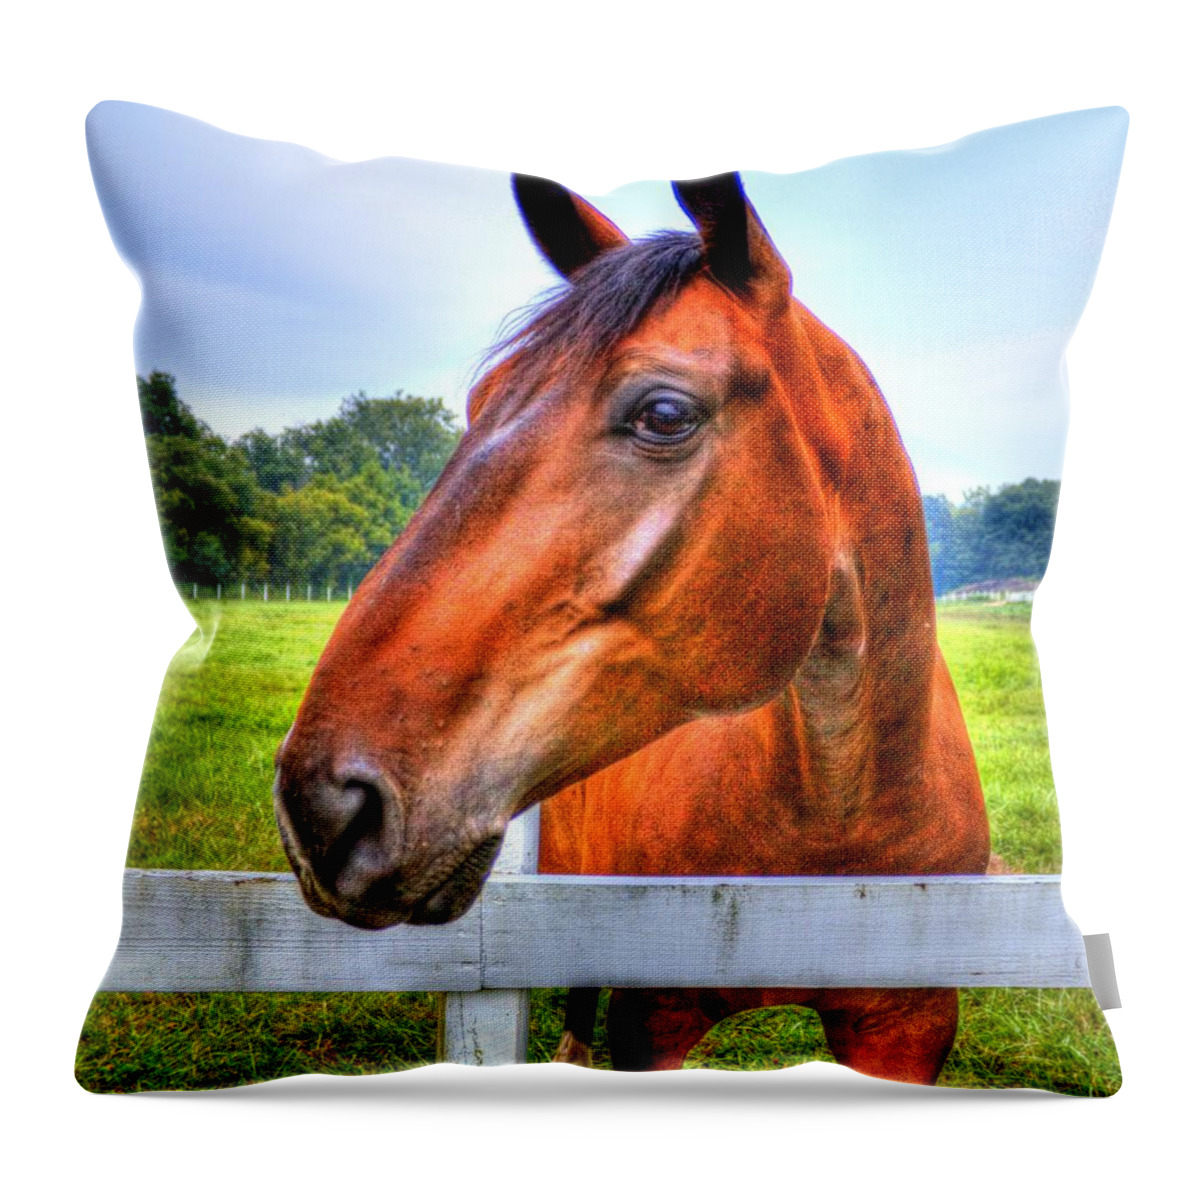 Horse Throw Pillow featuring the photograph Horse Closeup by Jonny D